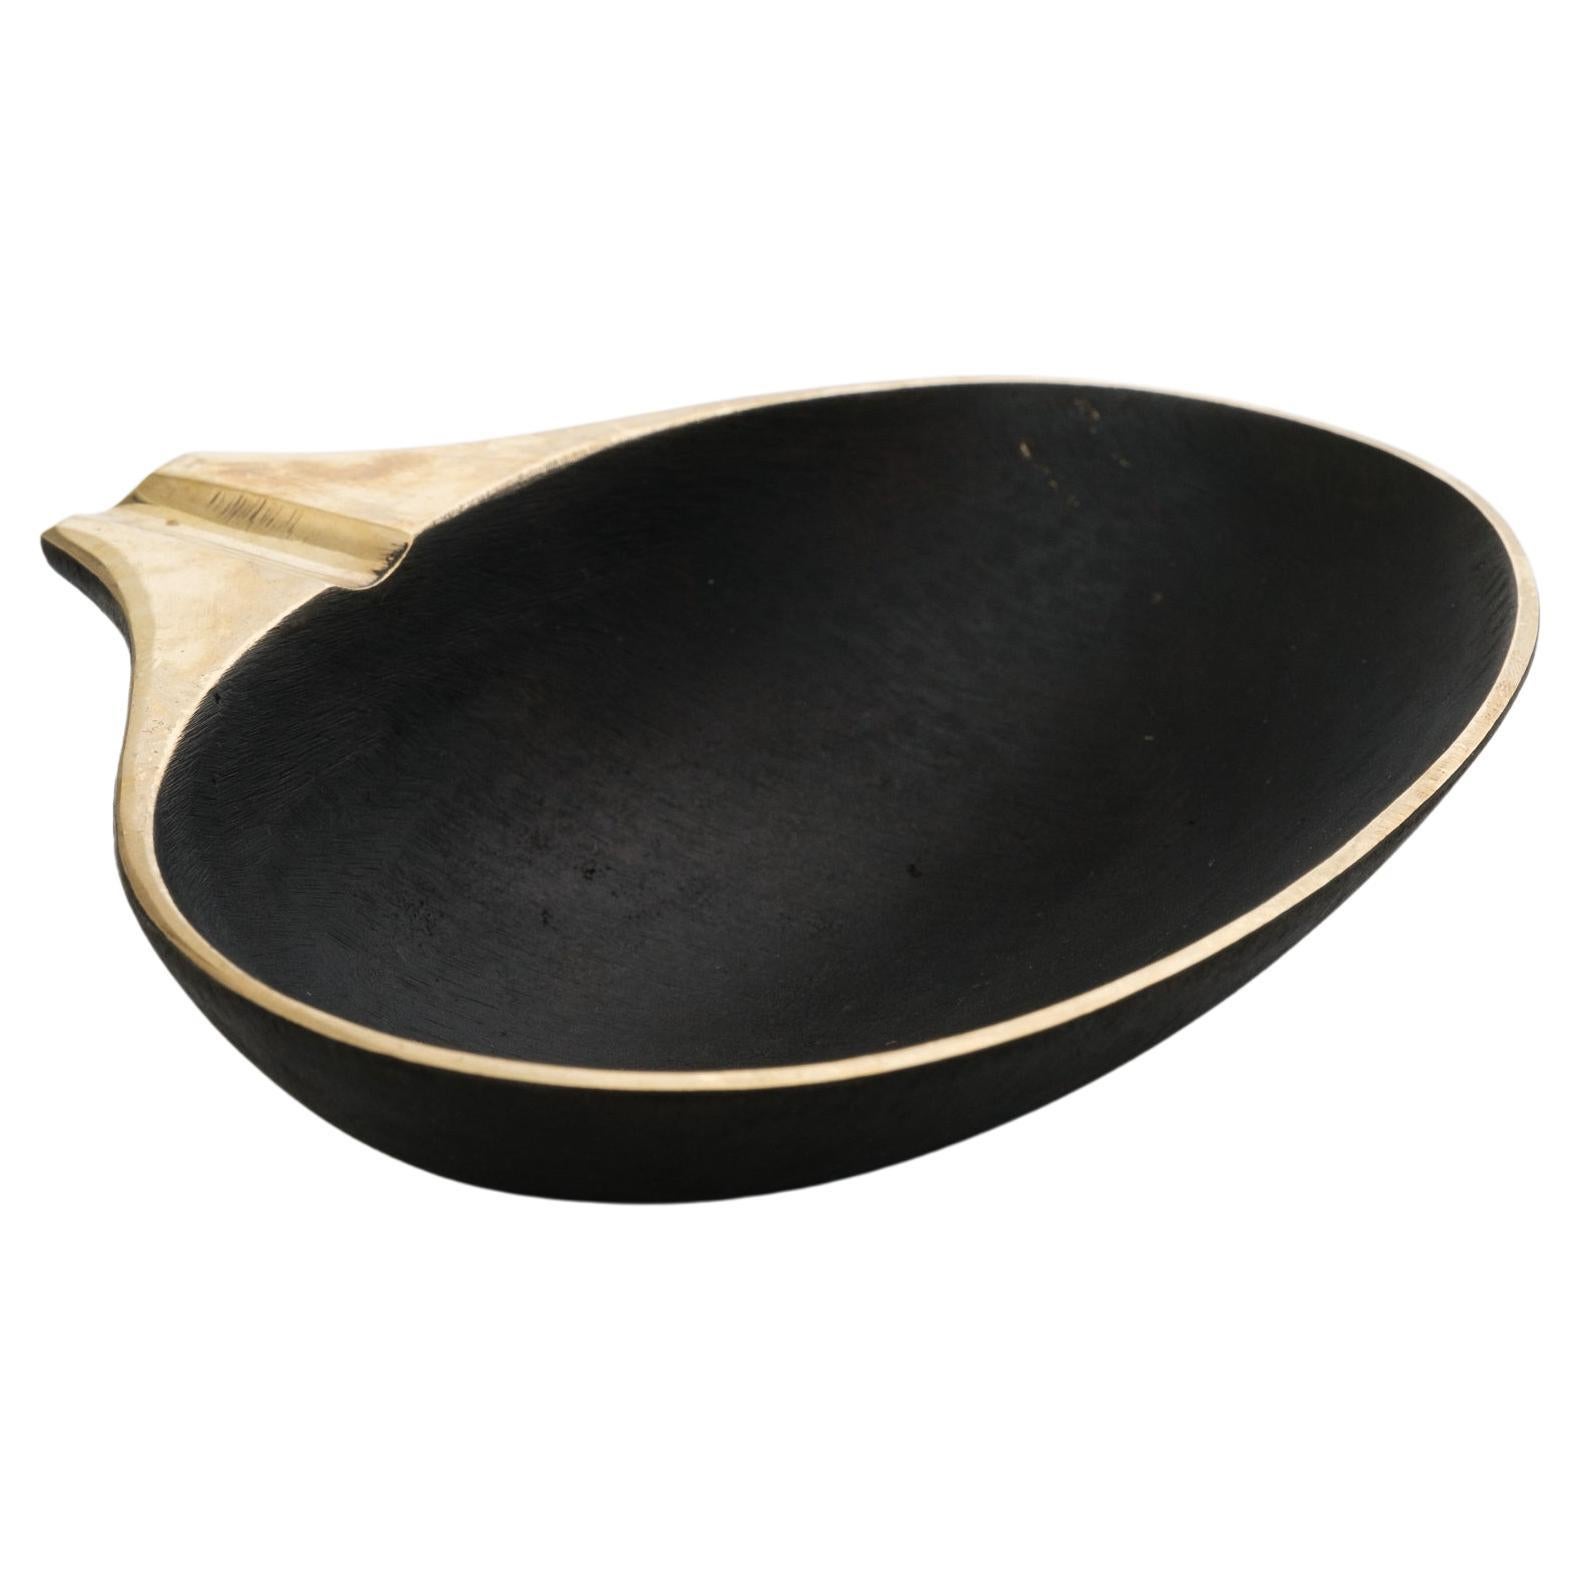 Carl Auböck Model #4308 Patinated Brass Bowl